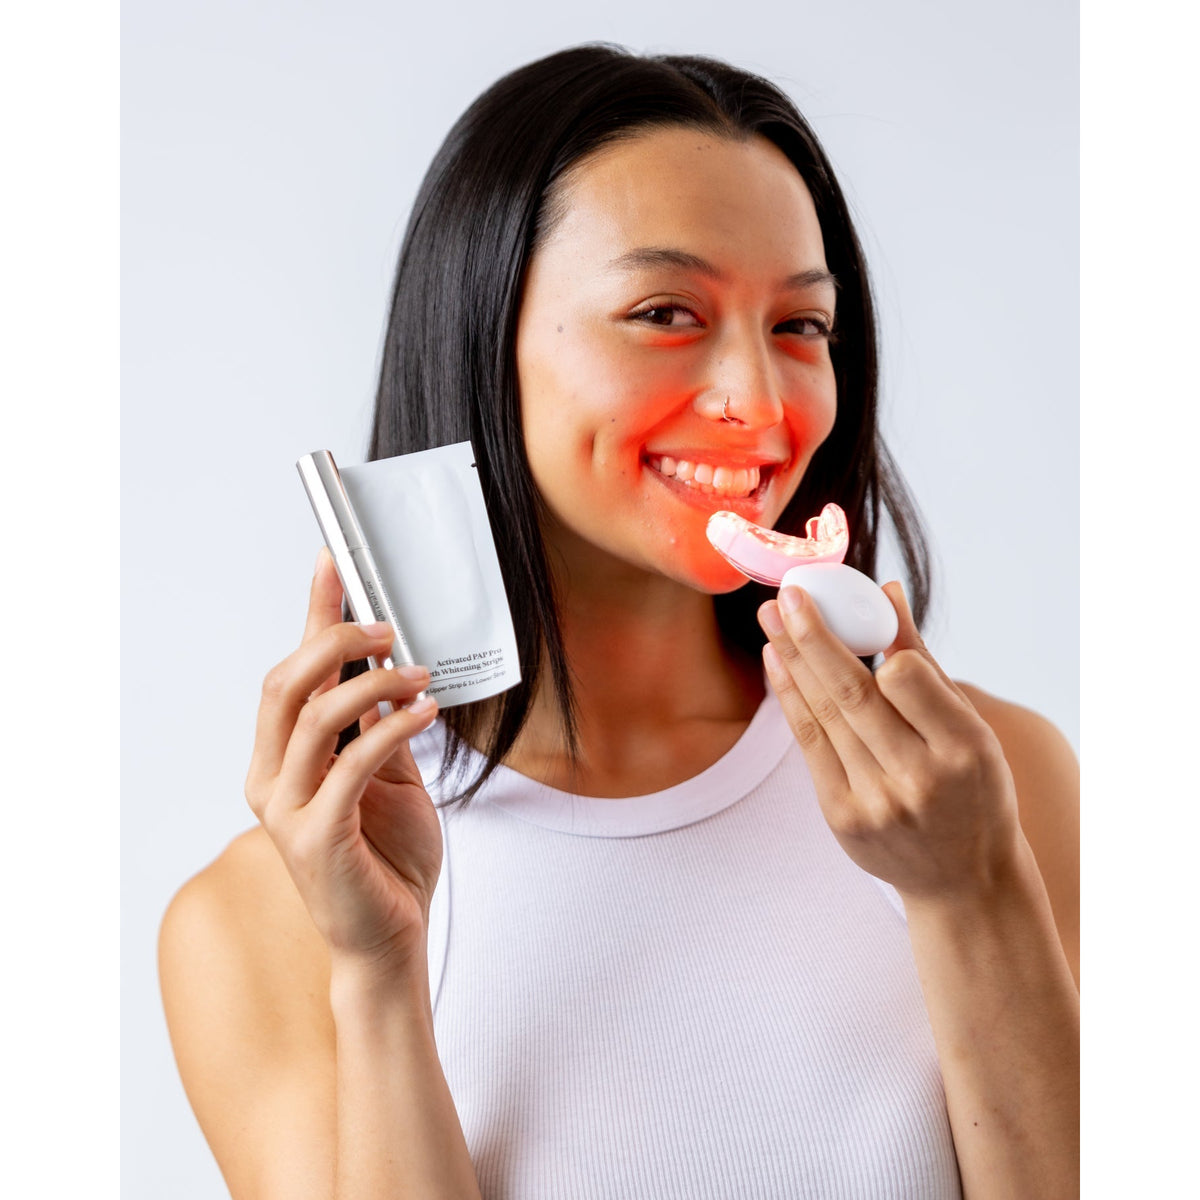 Spotlight Oral Care Professional LED Teeth Whitening System - White | LEDSYSTEM (7658231529660)